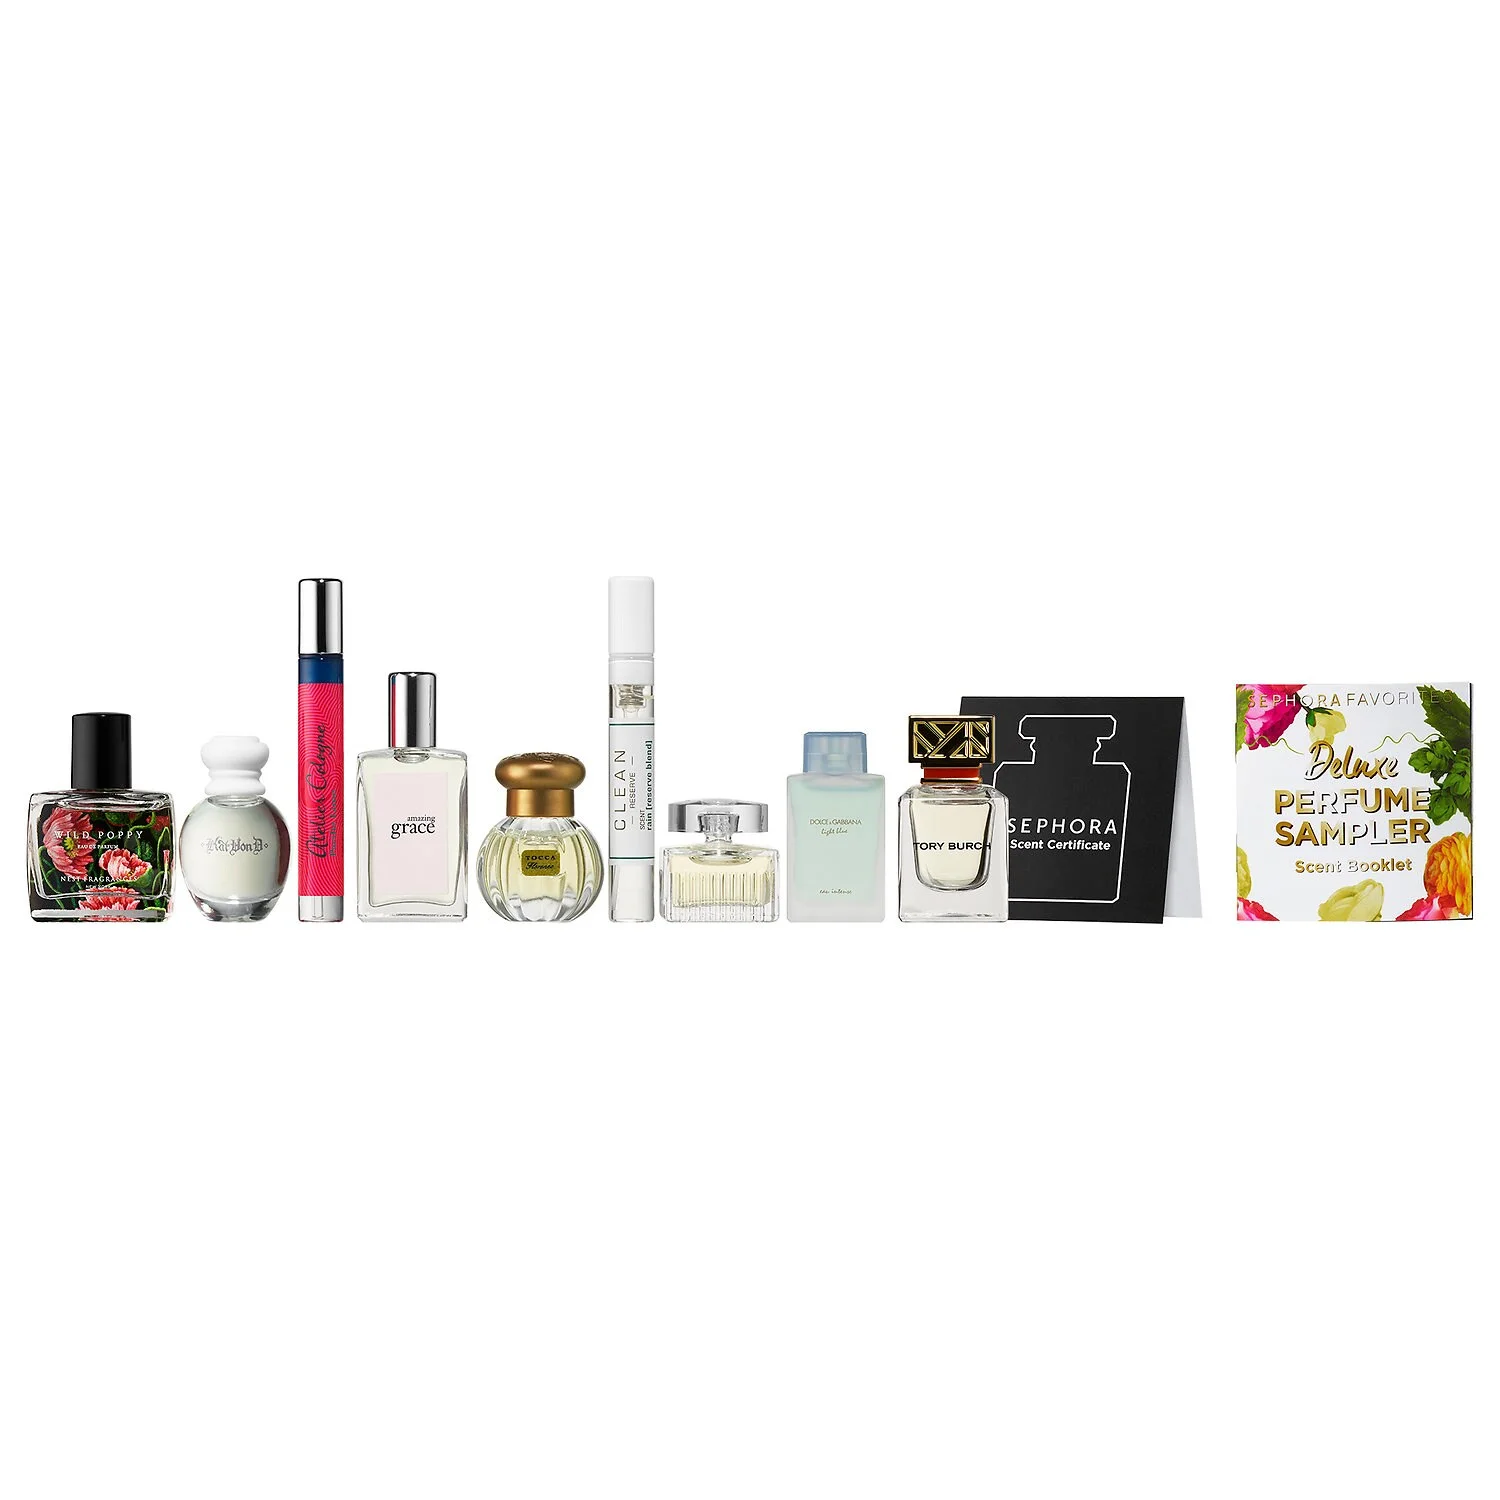 Deluxe Mini Perfume Sampler Set - Sephora Favorites